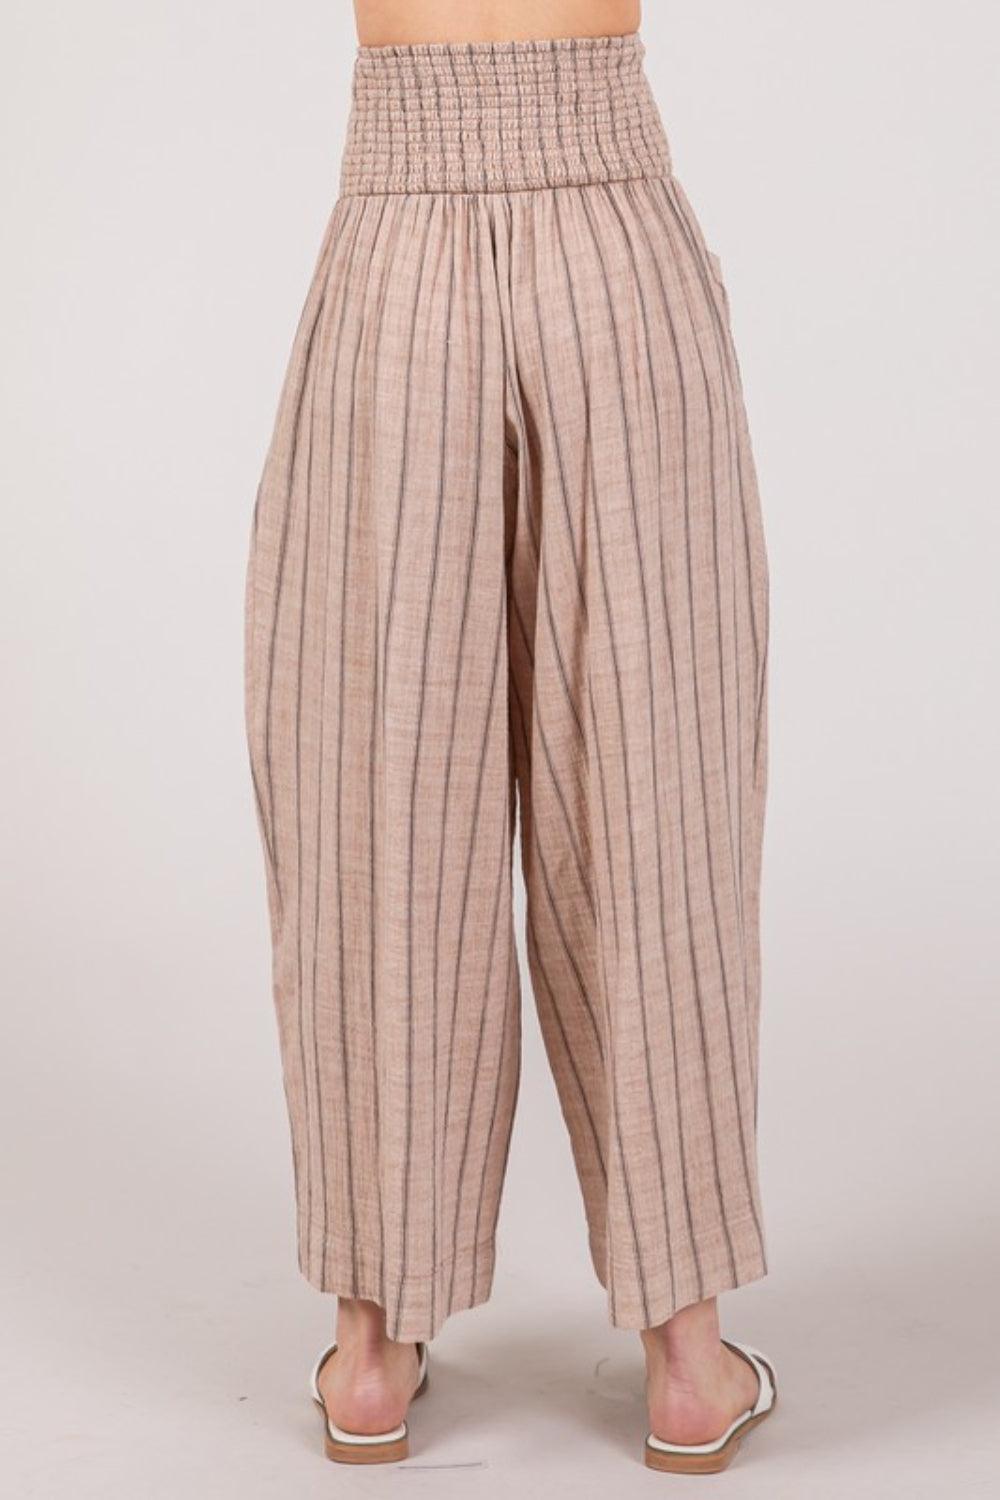 SAGE + FIG Cotton Gauze Wash Stripe Pants Pants